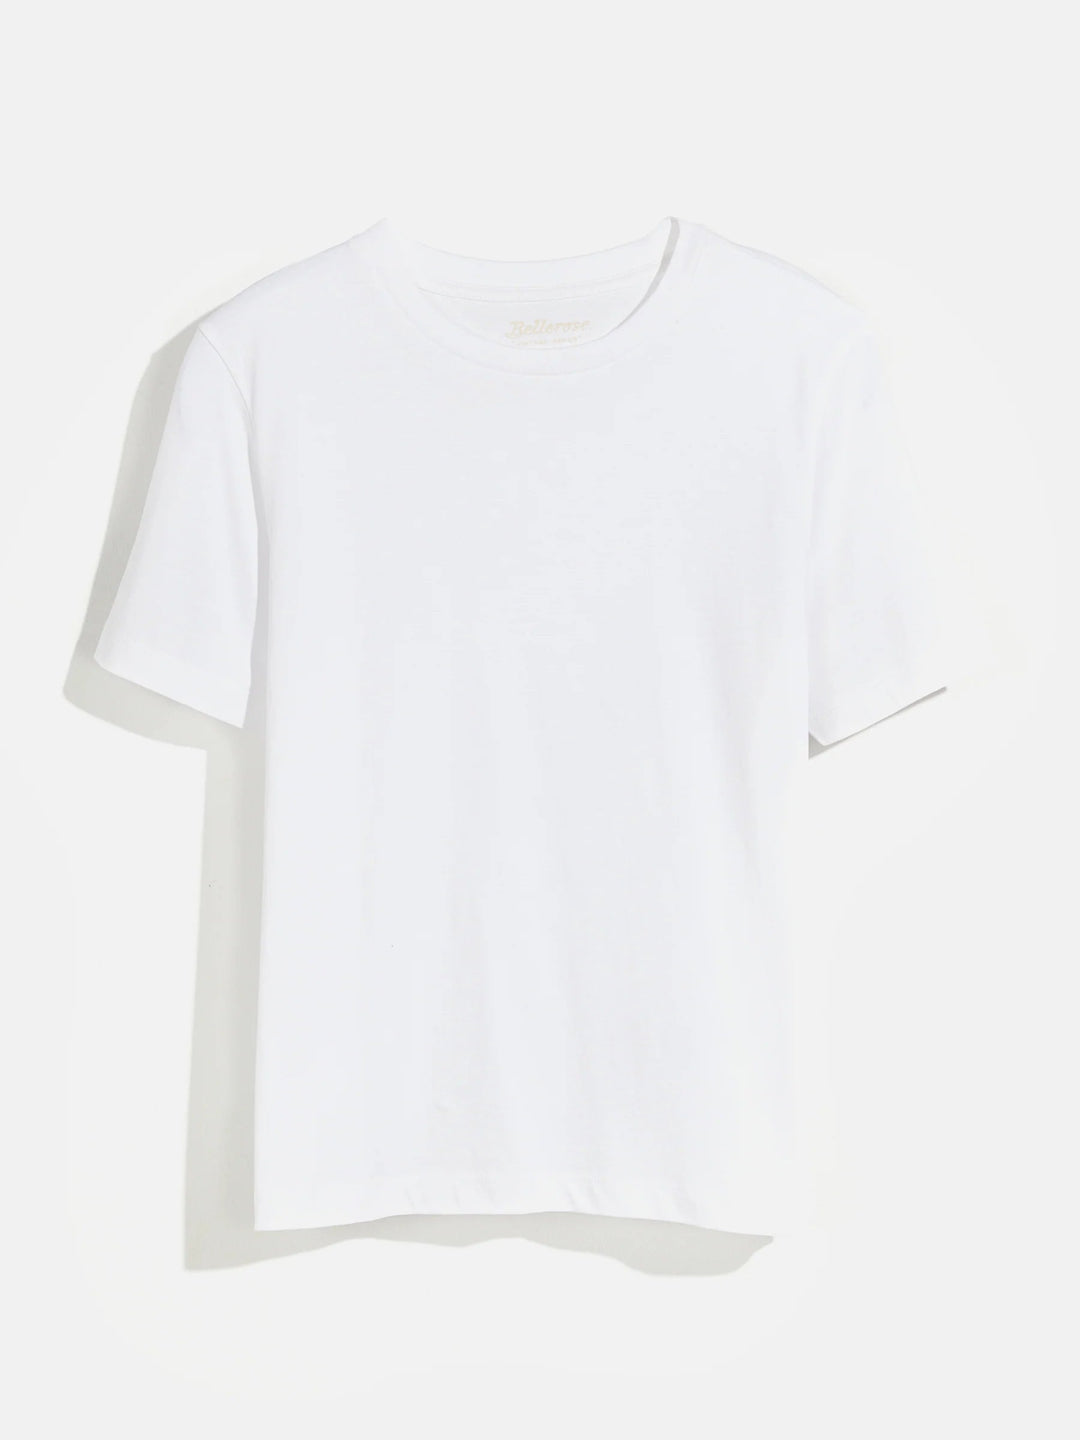 Vince T-Shirt - White - Posh New York